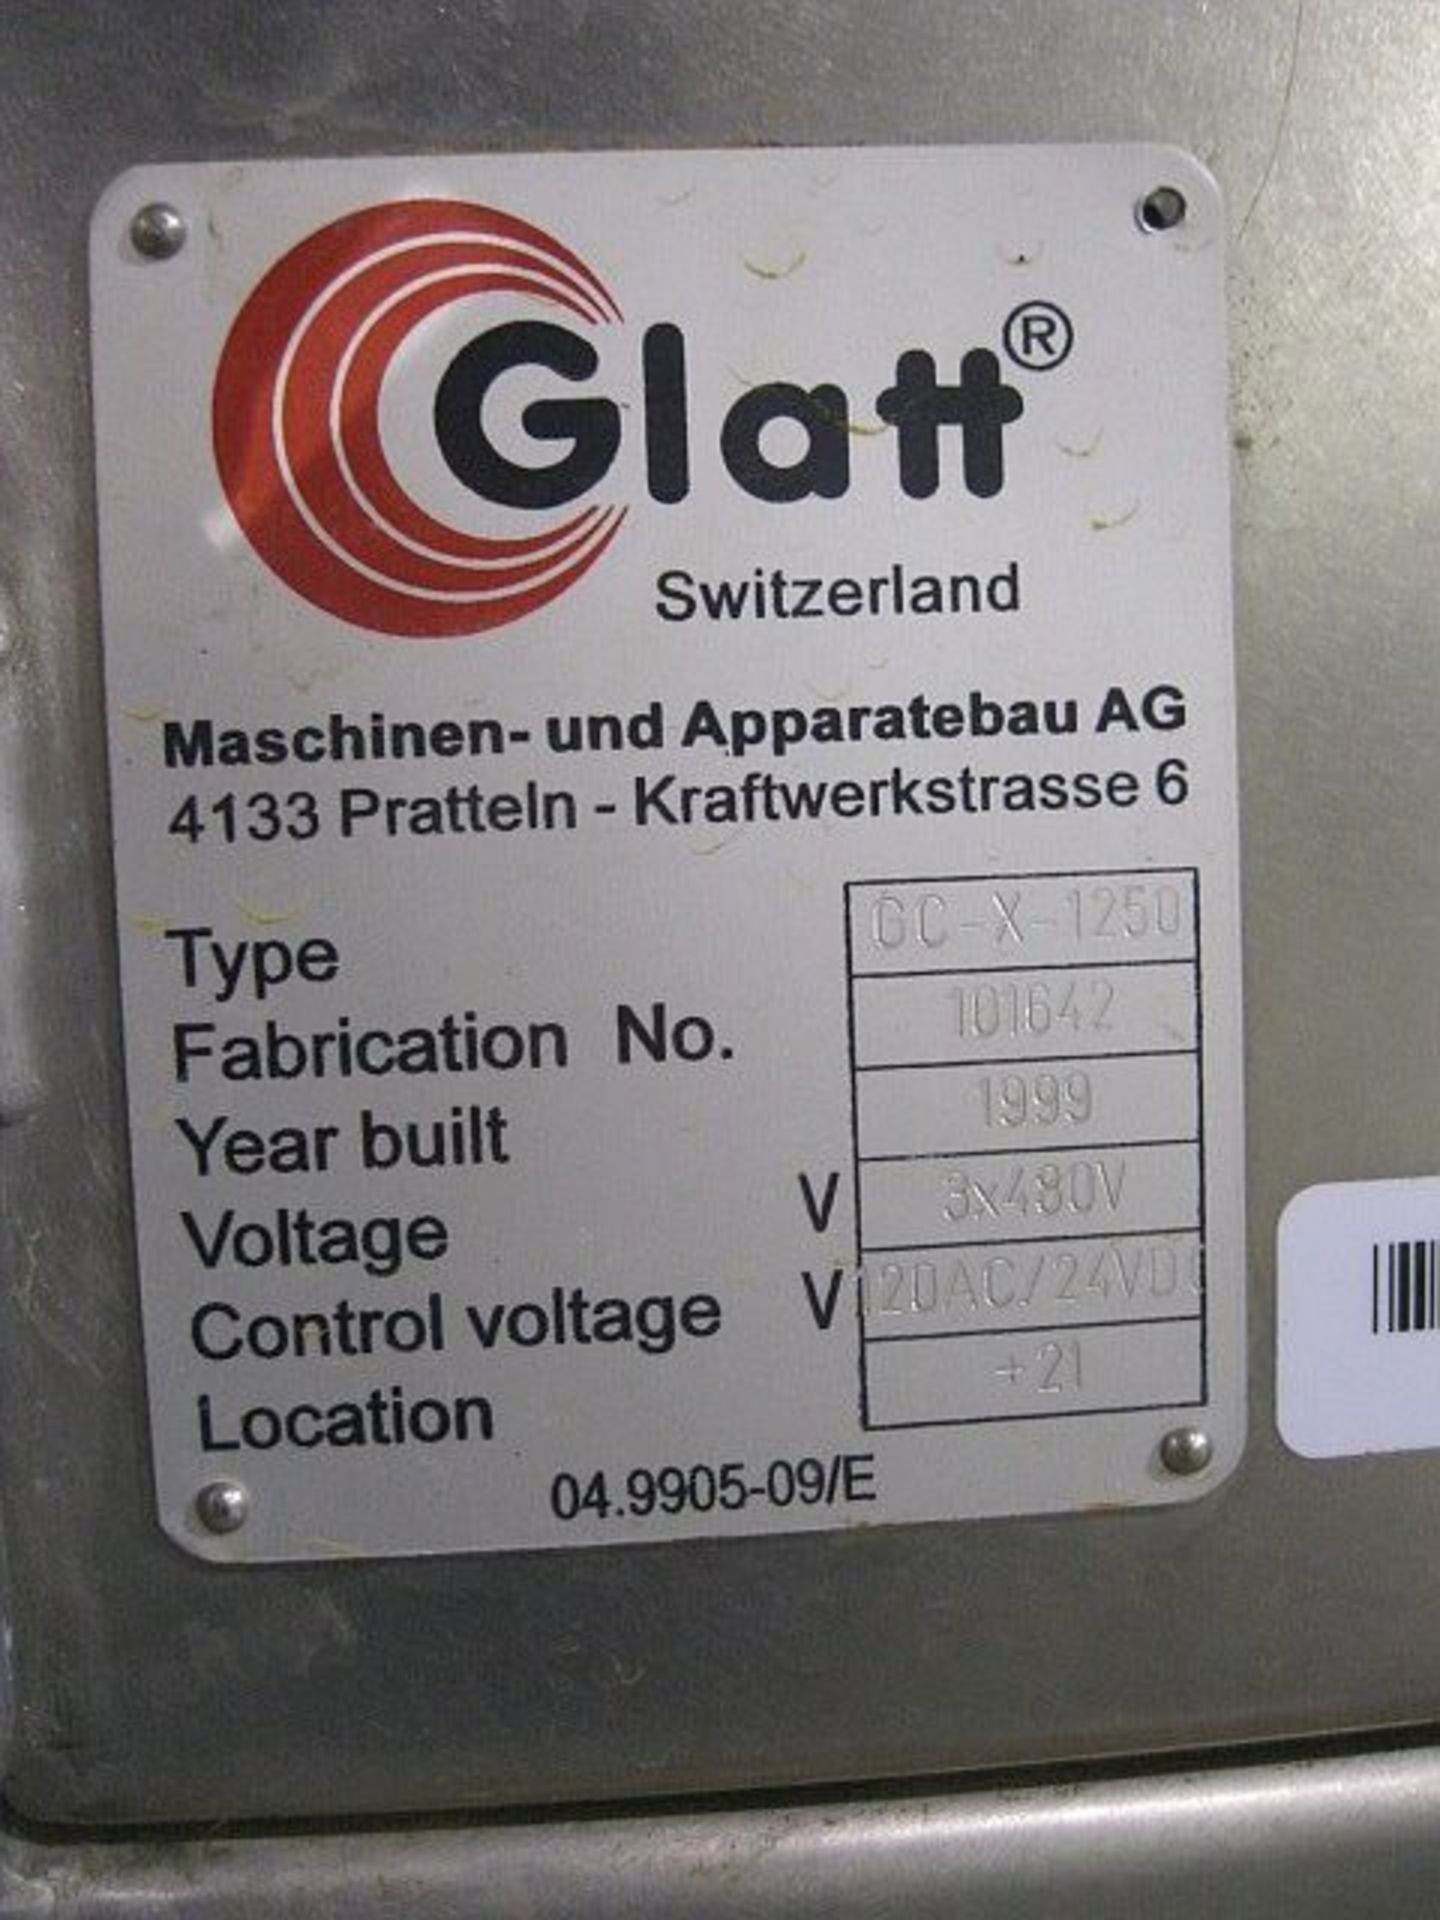 48" Glatt coating pan, type GC-X-1250, stainless steel construction - Image 20 of 20